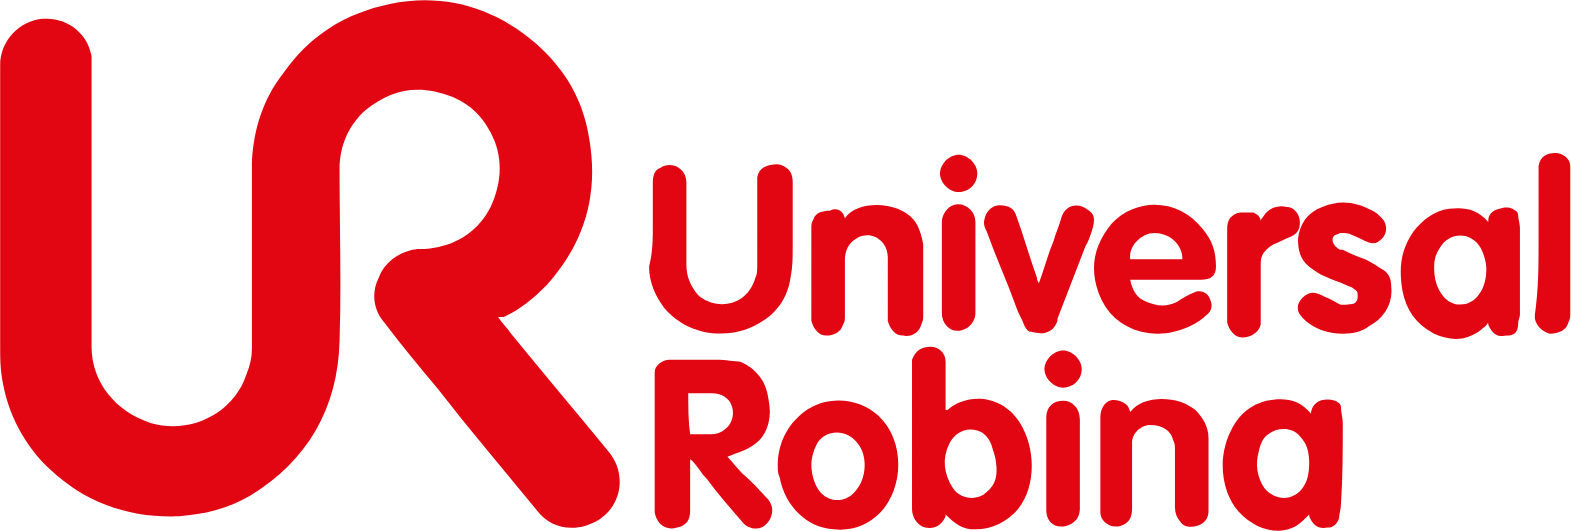 Universal Robina Corporation logo large (transparent PNG)